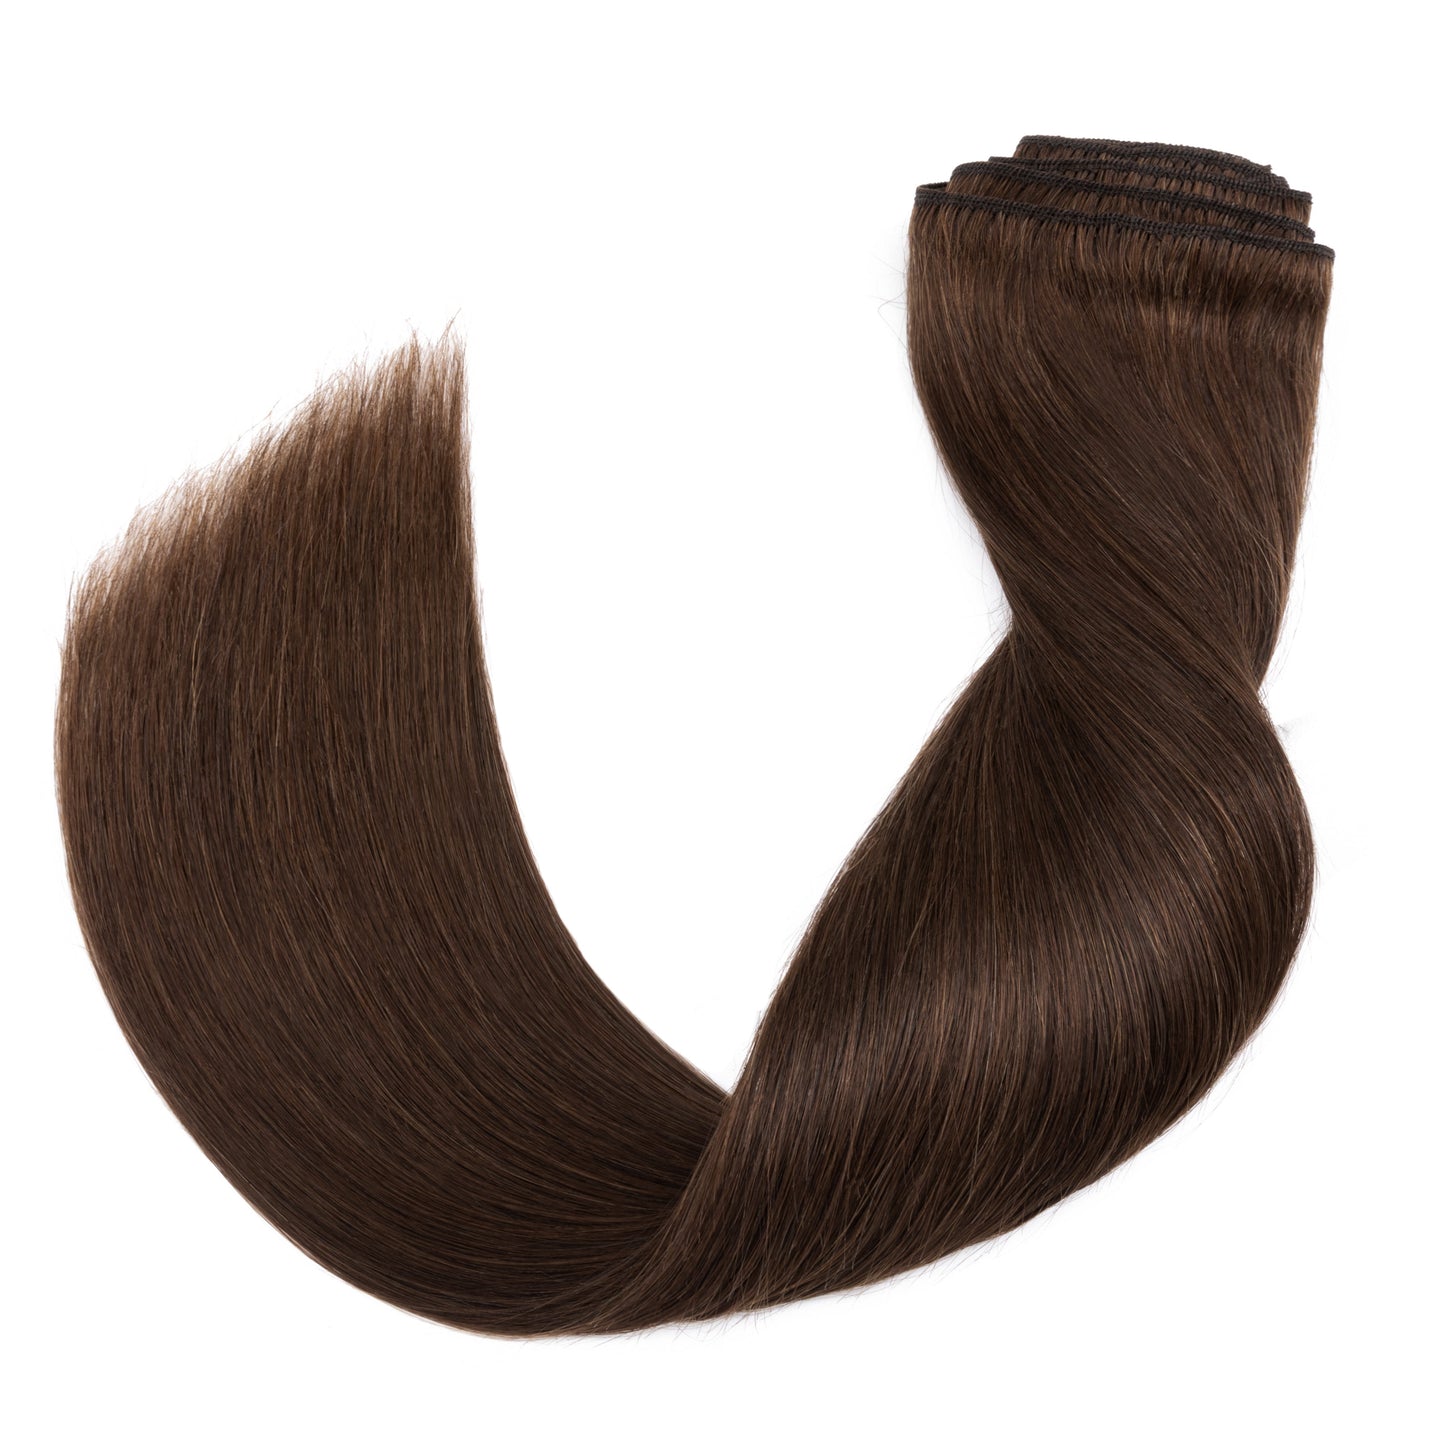 SEGOHAIR Clip In Hair Extensions Real Human Hair Light Weight Chocolate Brown segohair.com